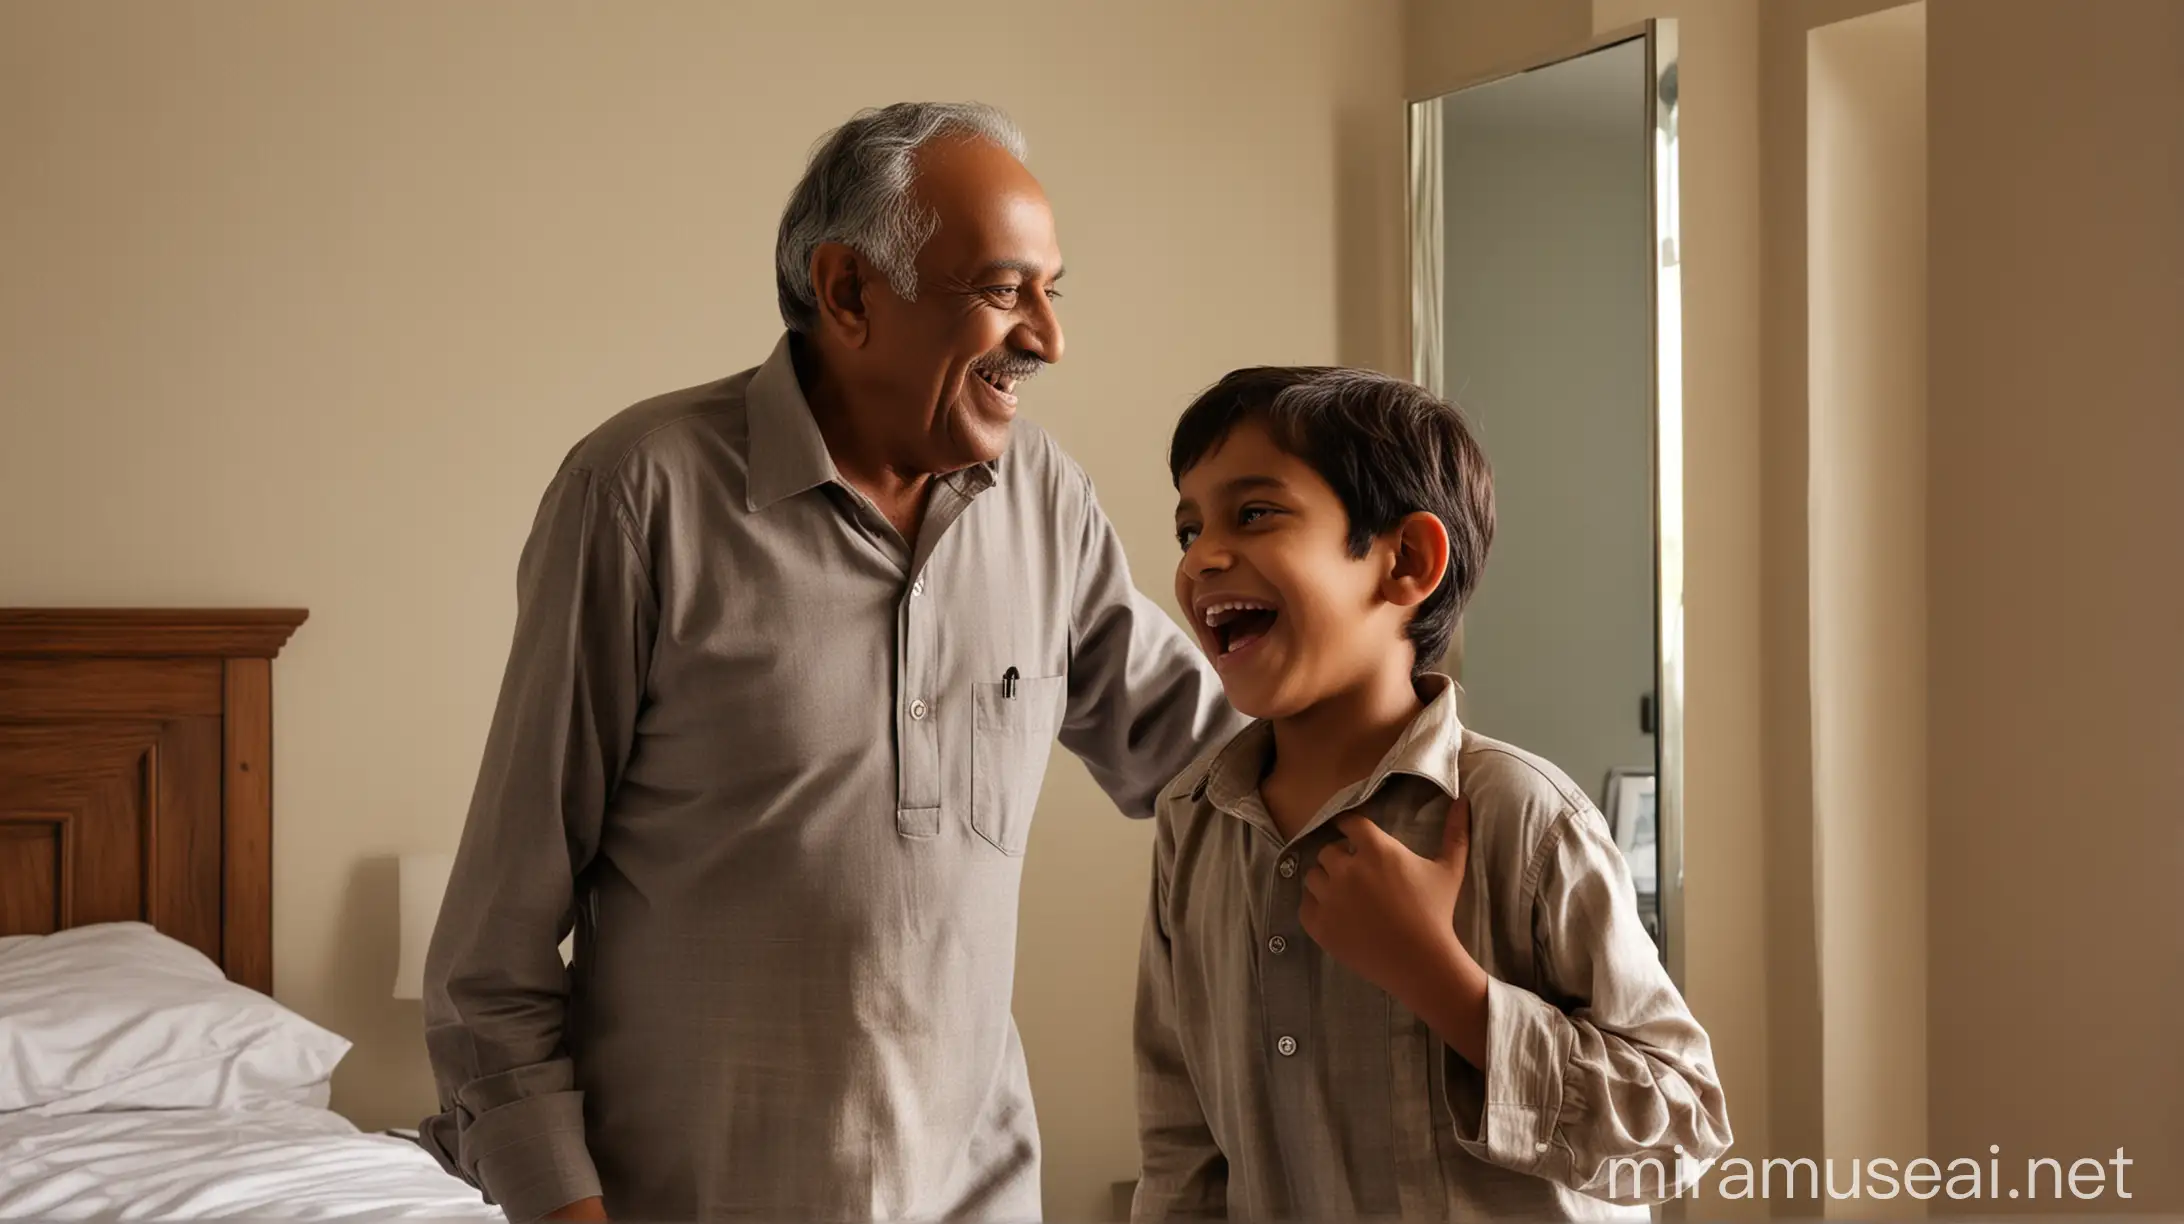 Joyful Indian Grandfather and Grandchild Admiring Bedroom Mirror Together